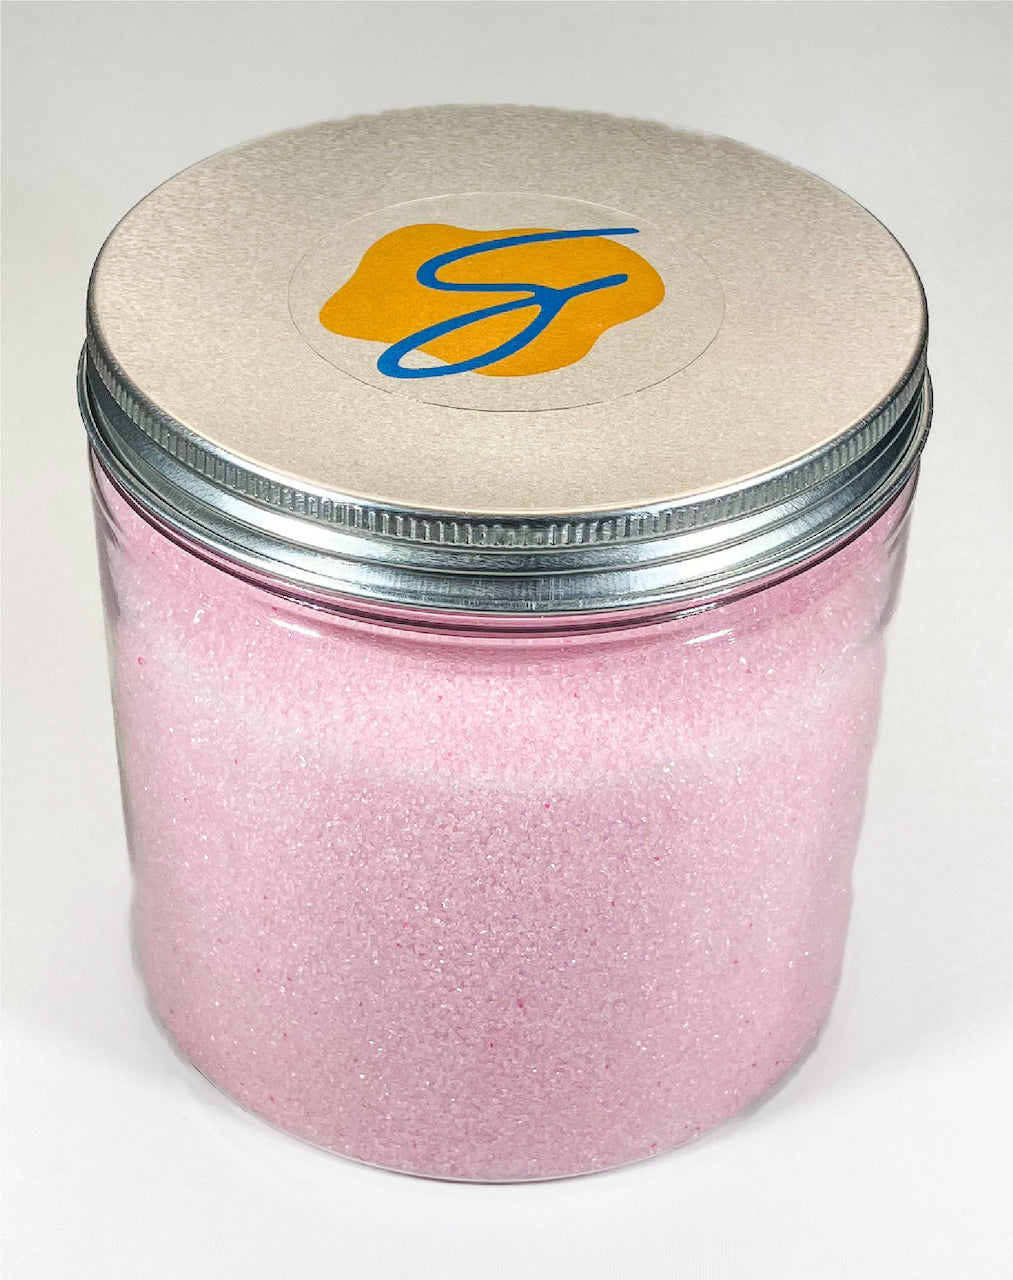 One lb jar of Supreme Cotton Candy Sugar of Pink Bubblegum 粉紅香口膠/口香糖味棉花糖砂糖